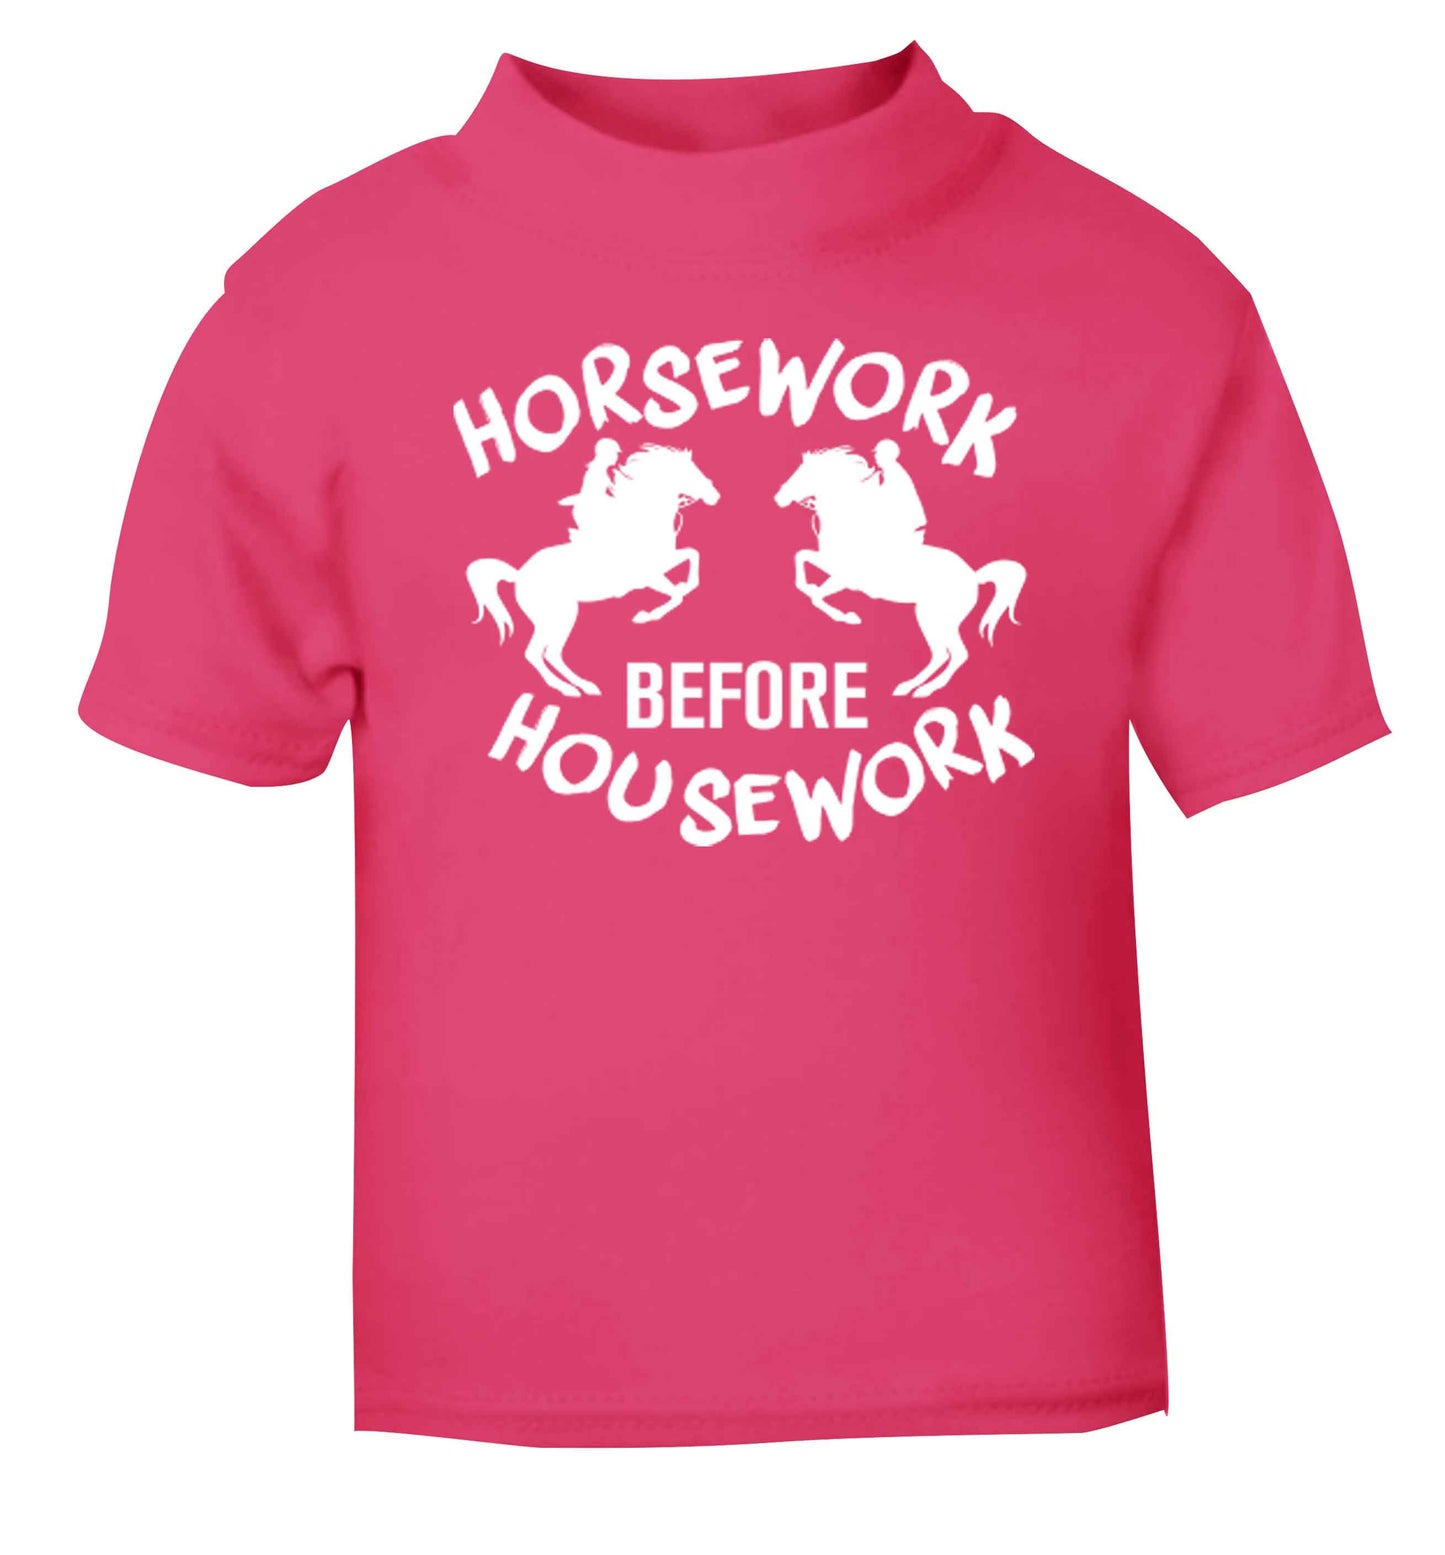 Horsework before housework pink baby toddler Tshirt 2 Years